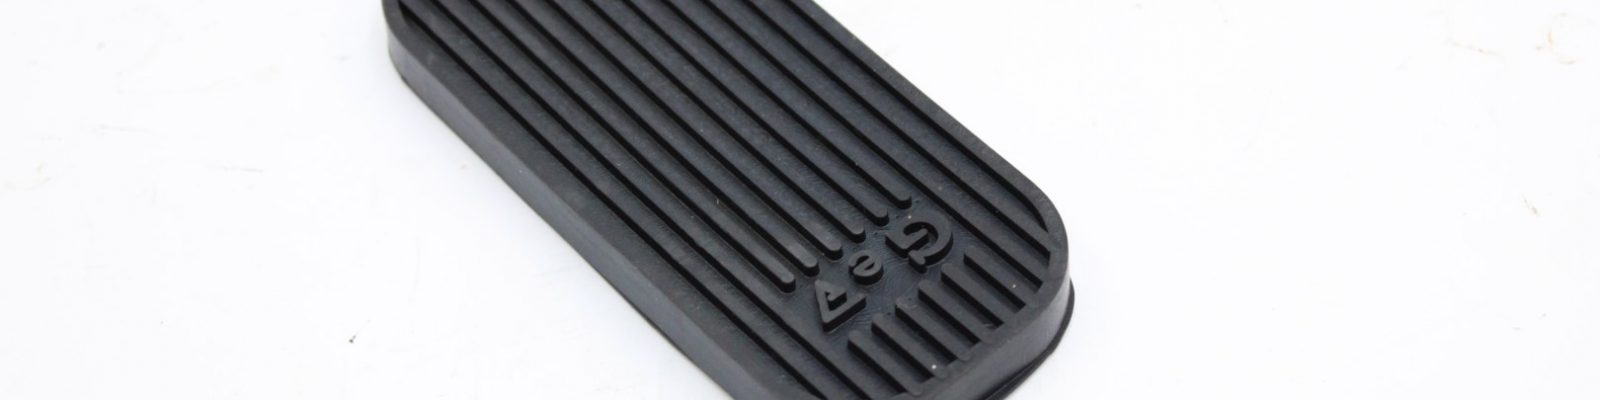 Fiat Uno throttle pedal rubber pad